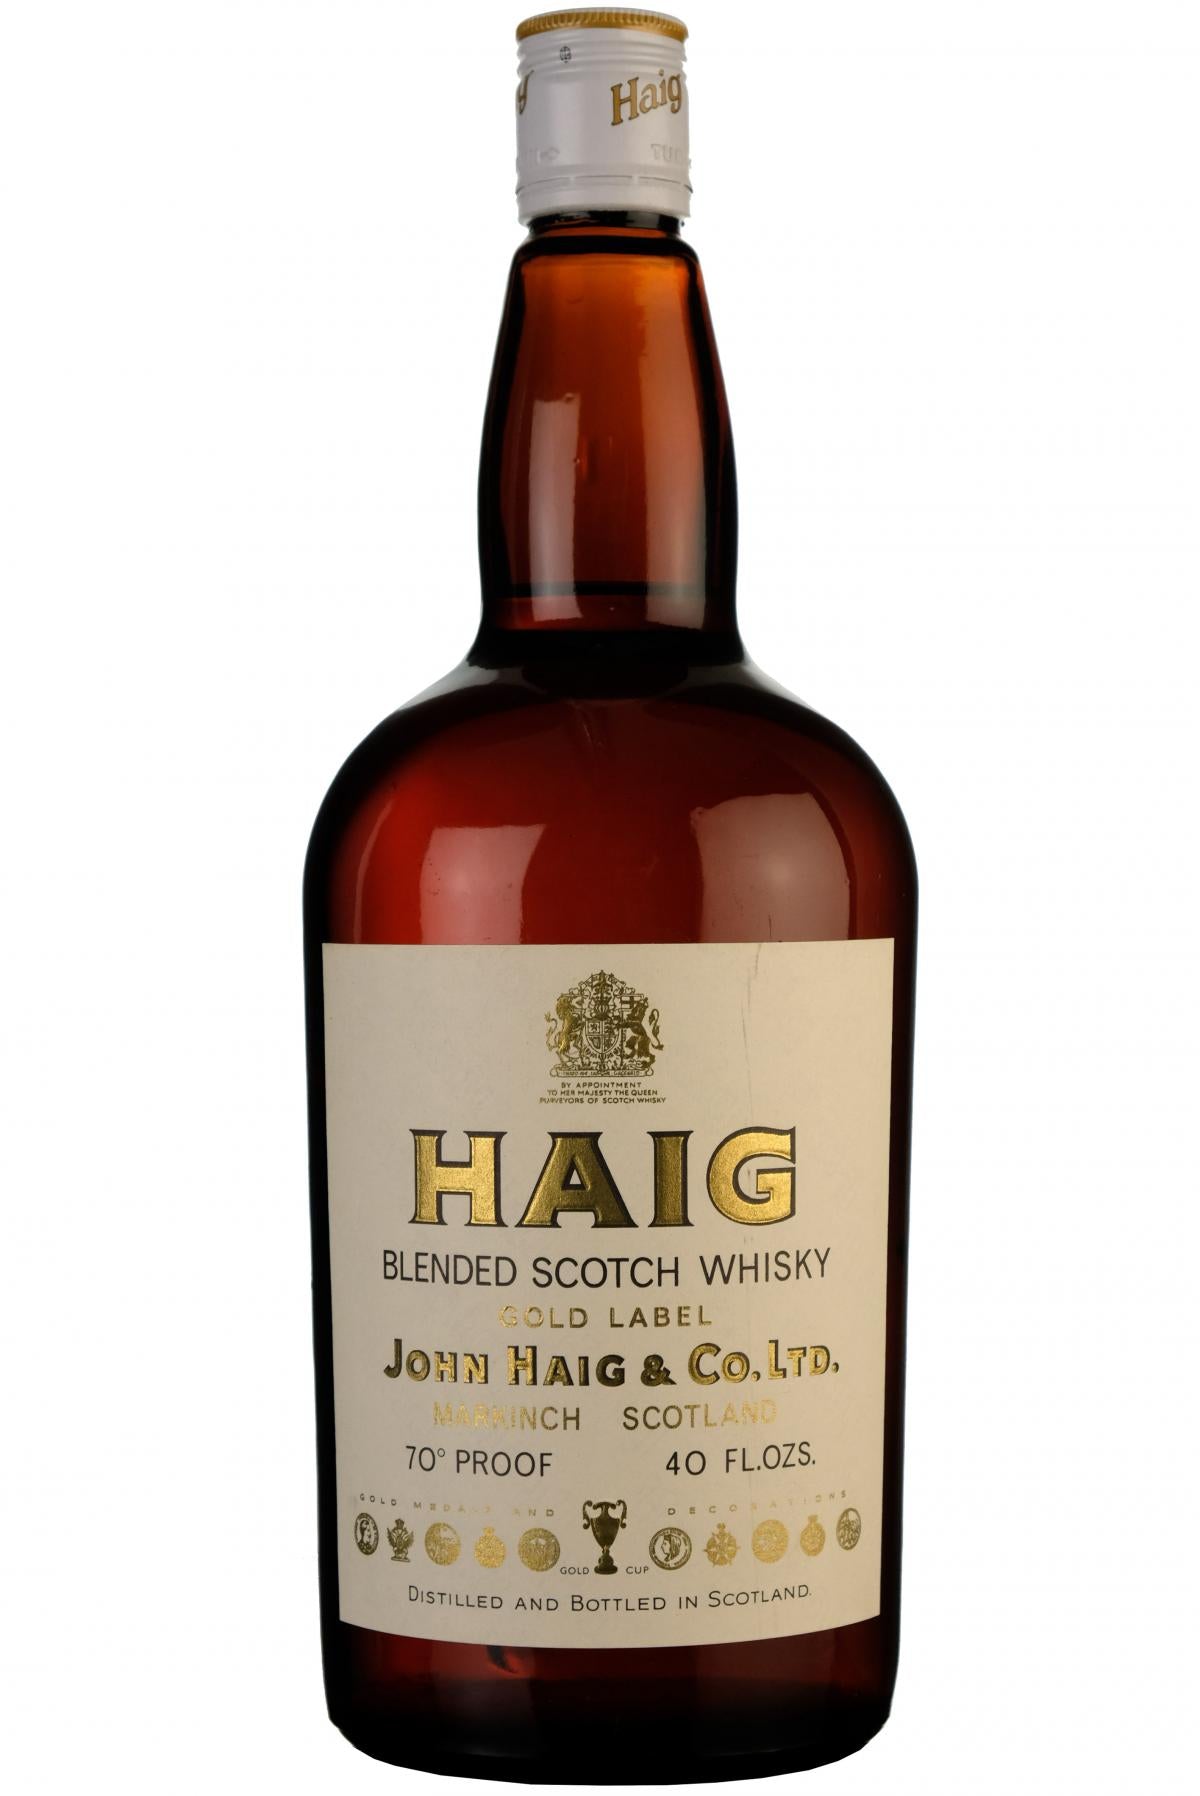 haig gold label 1970s, blended scotch whisky